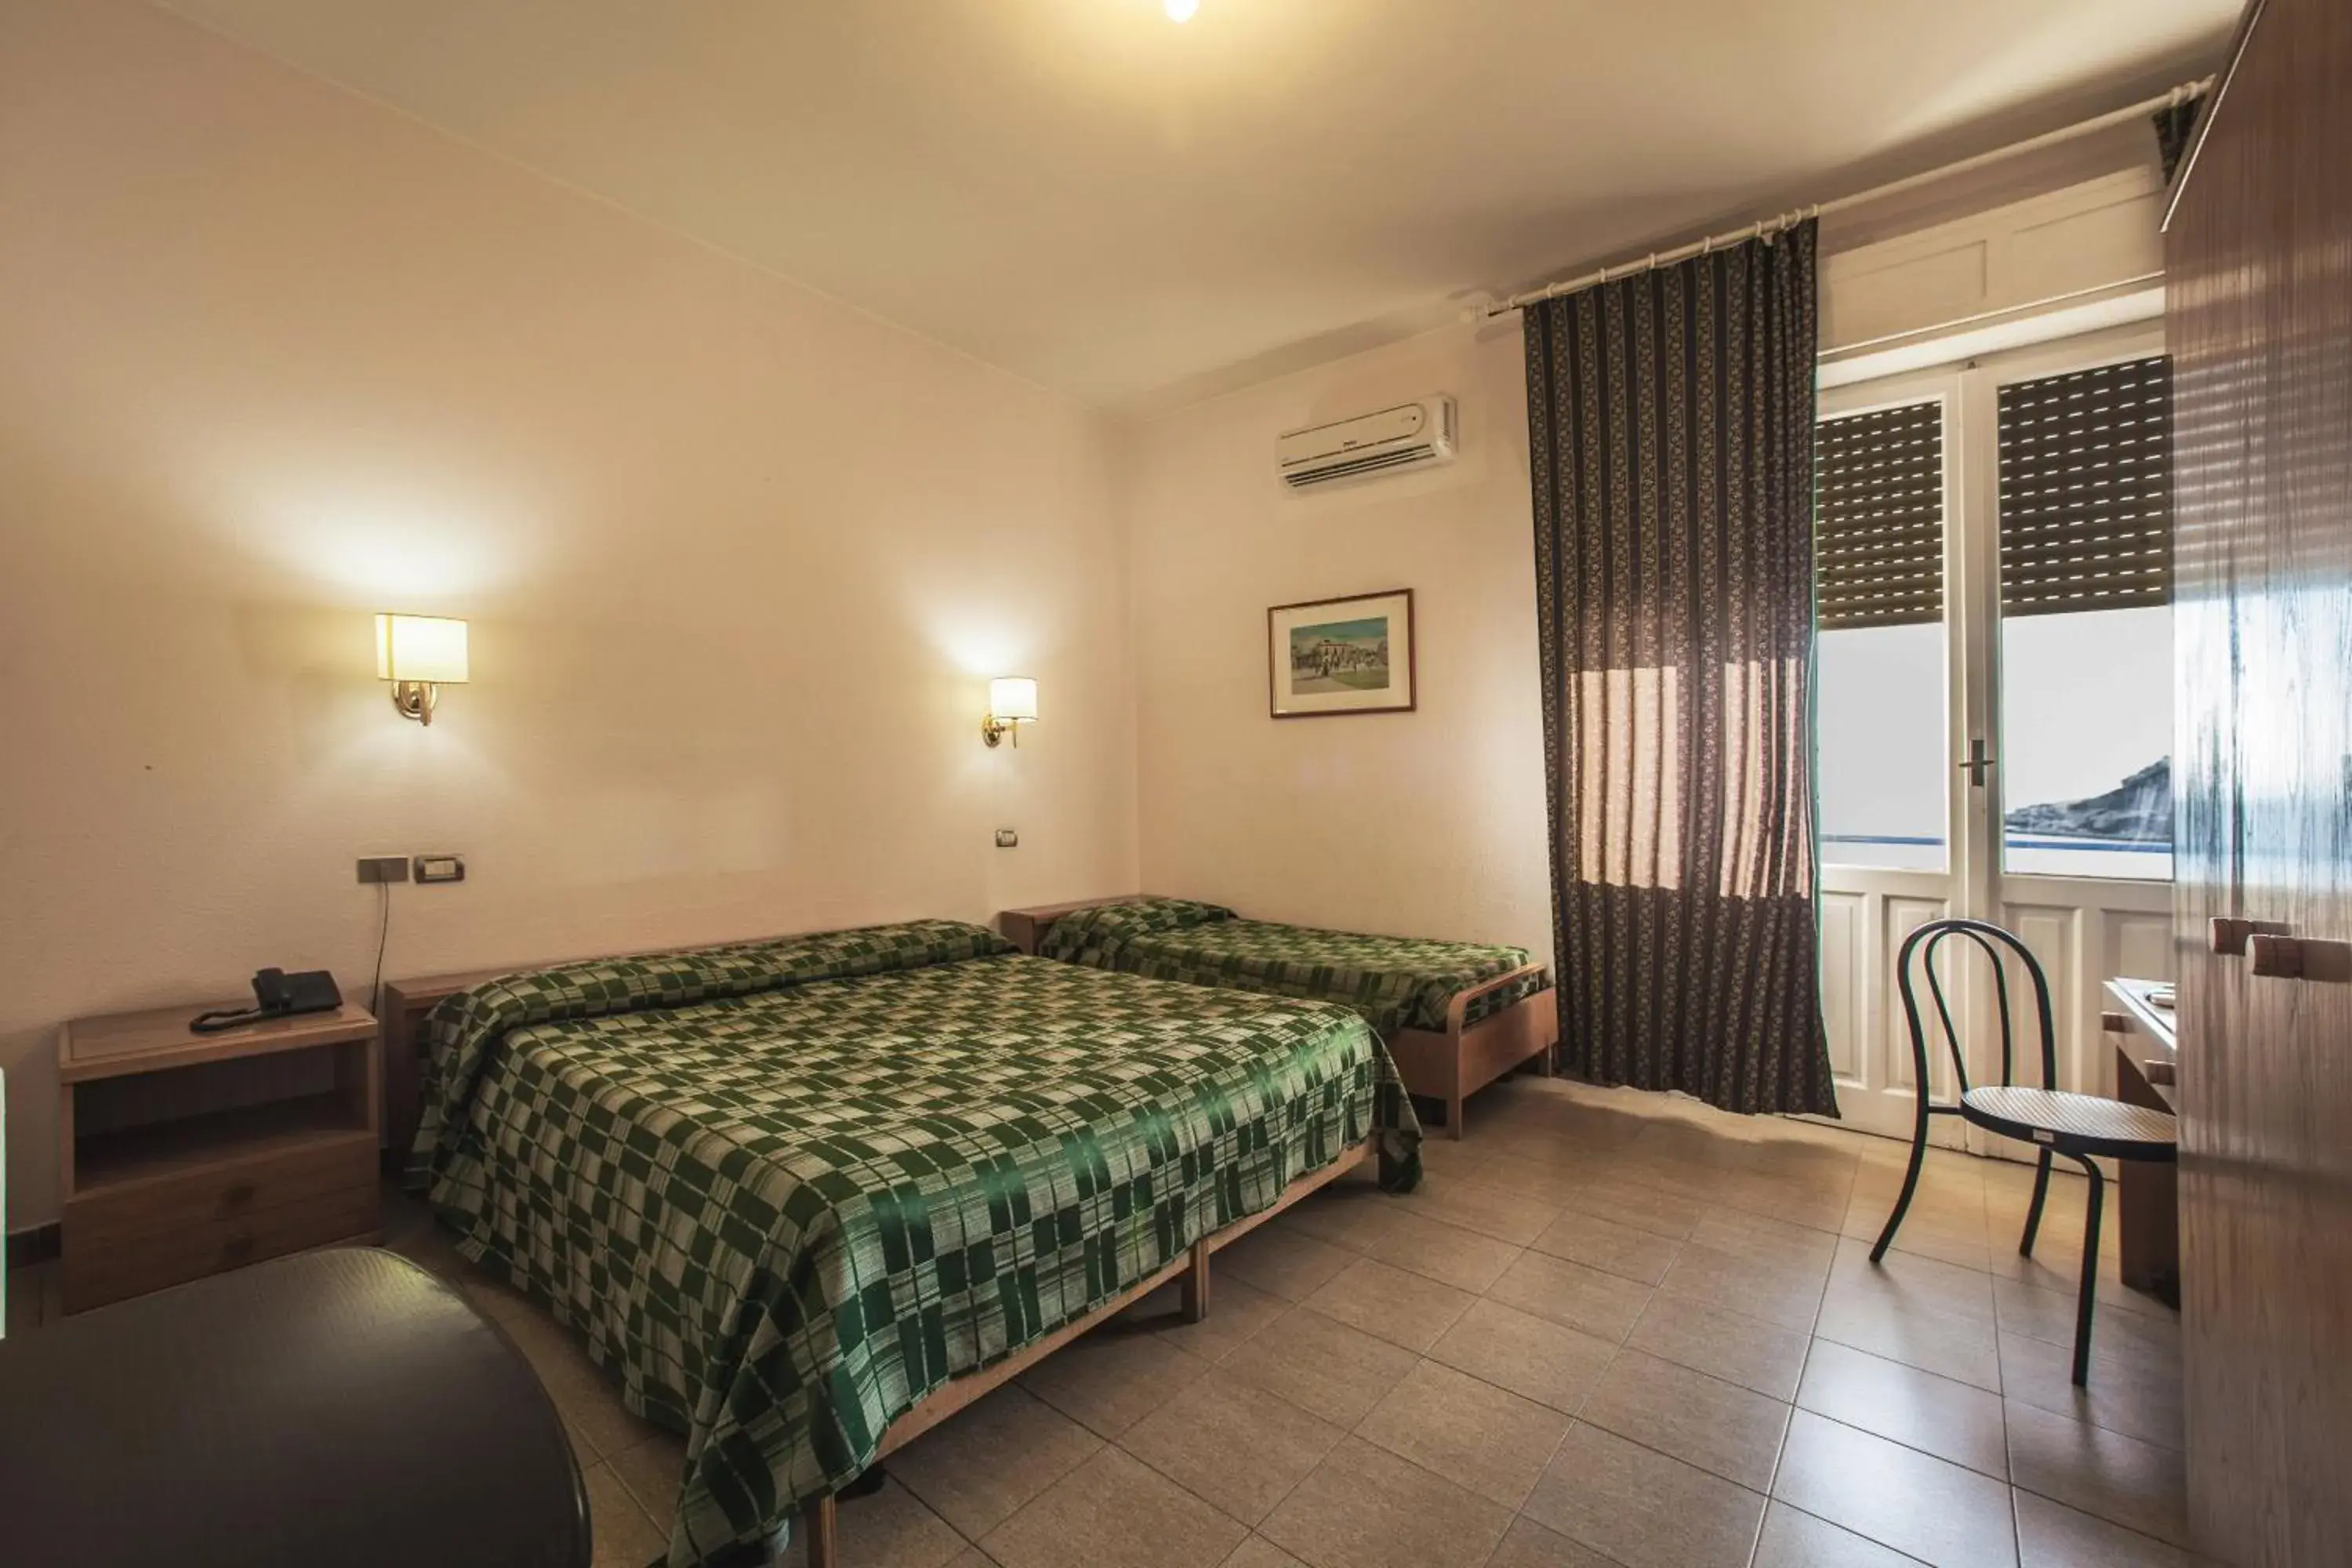 Bed, Room Photo in Hotel Calamosca